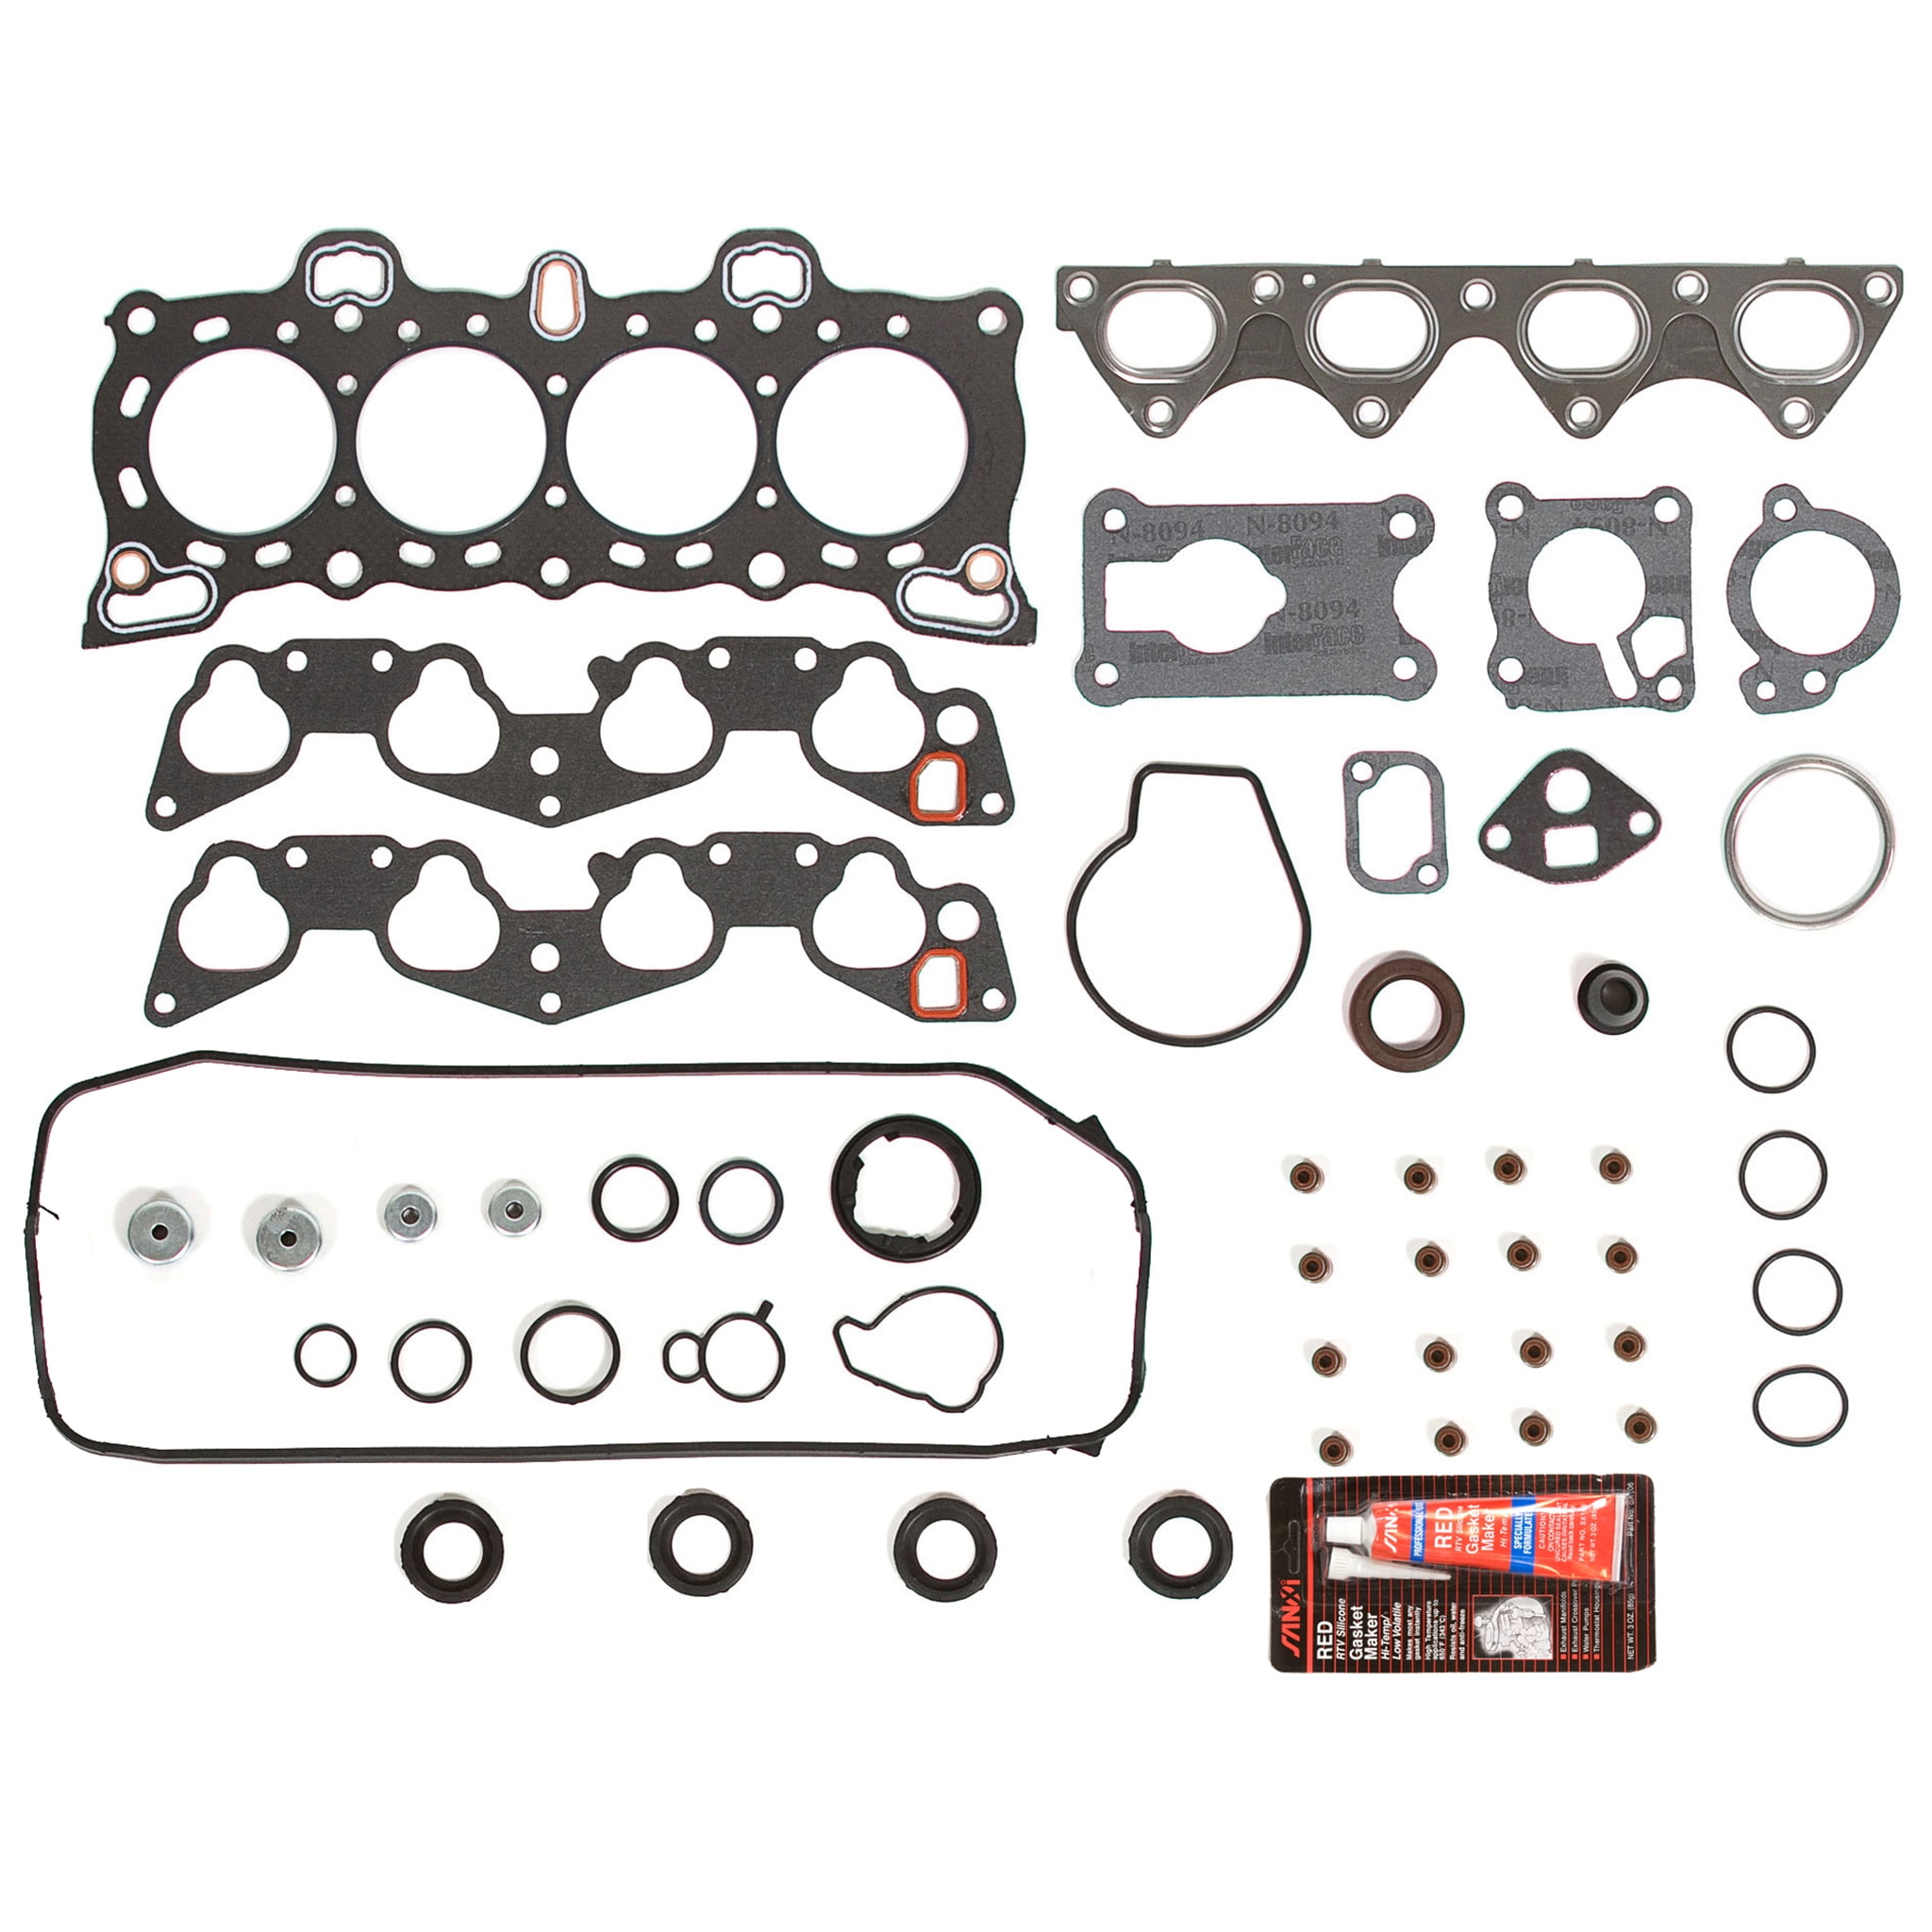 Engine Head Gasket Kit Set NEW for Honda Civic CRX Del Sol 1.5L 1.6L 